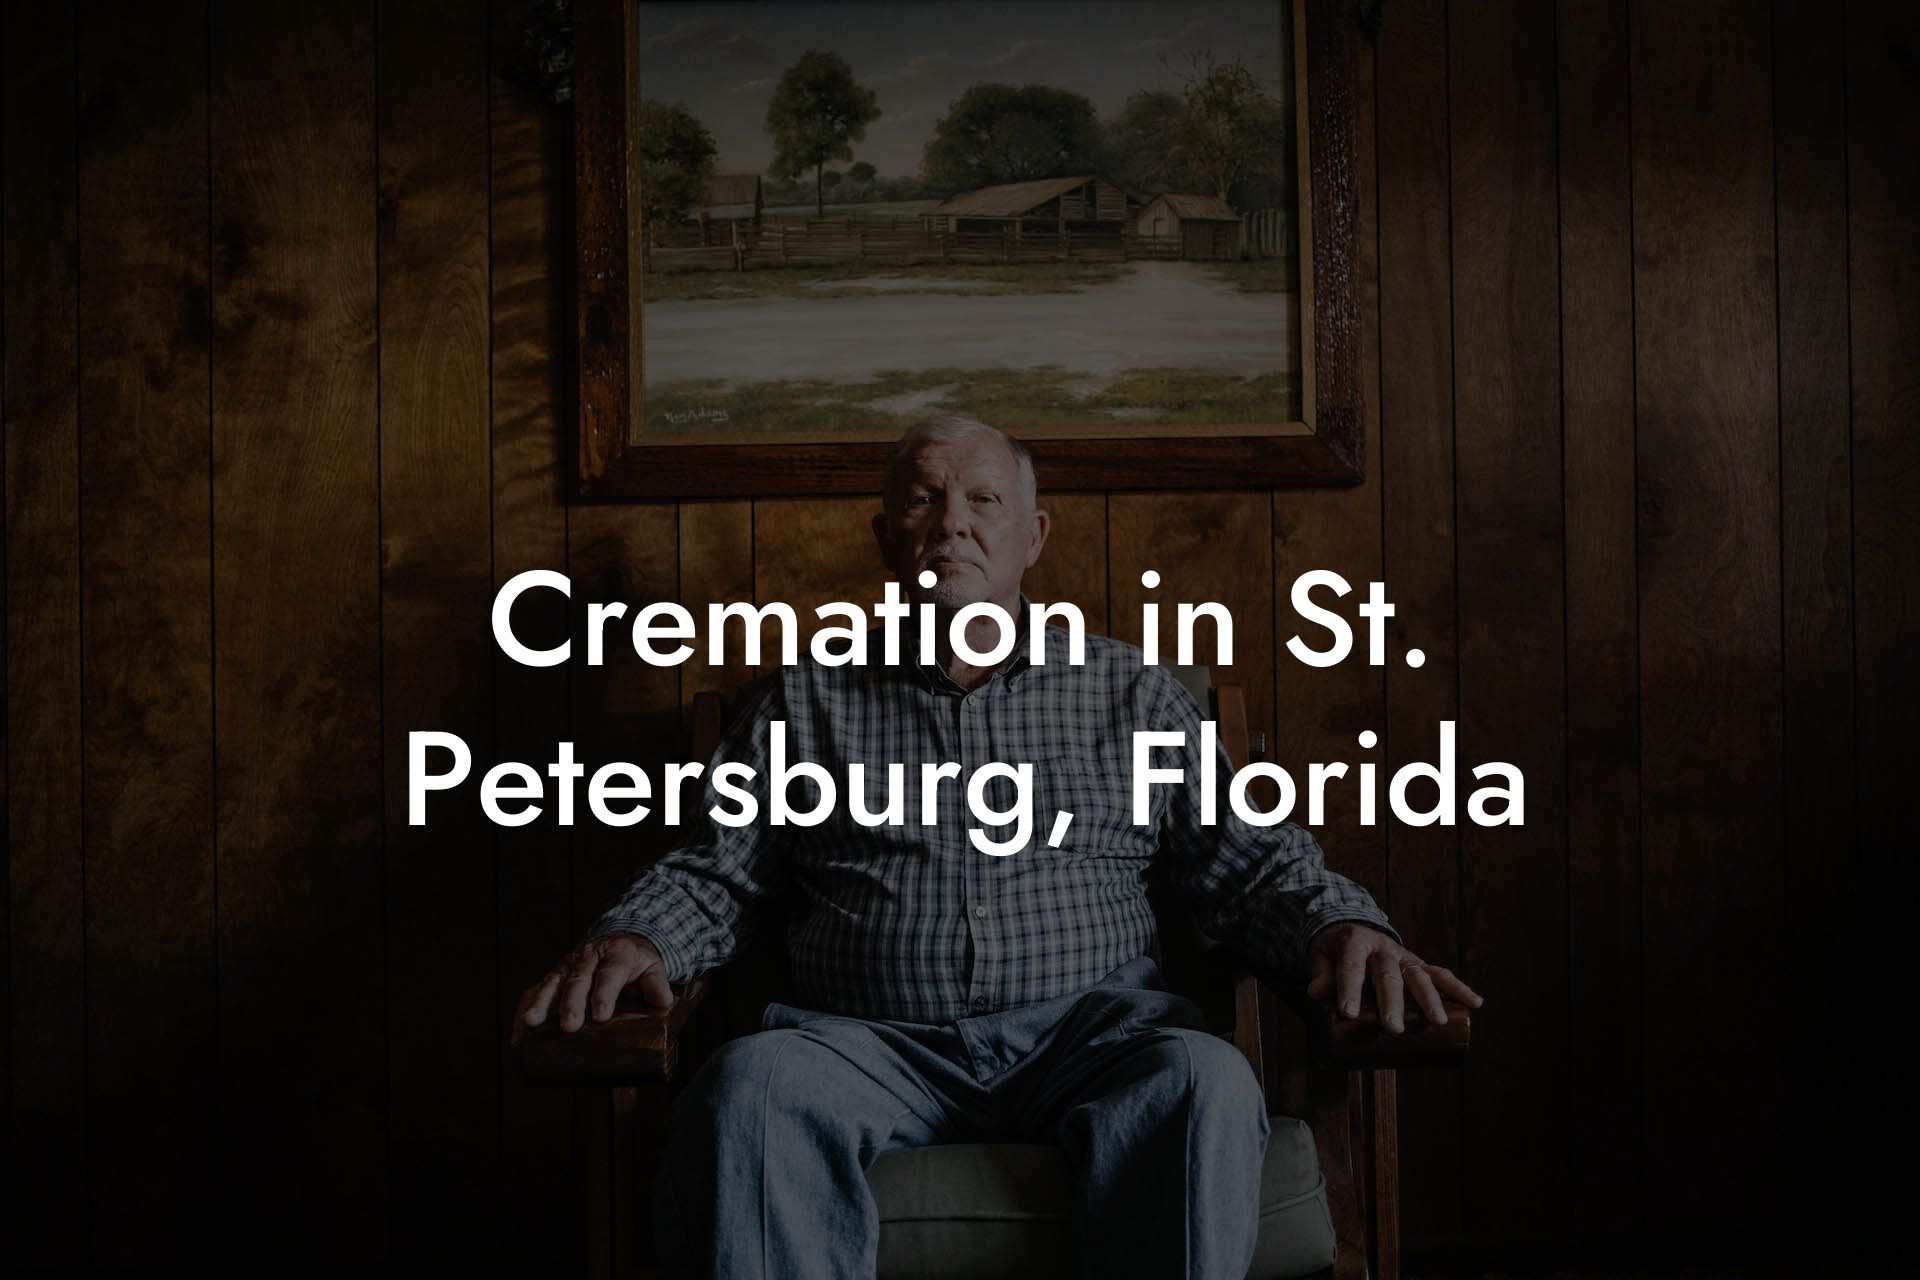 Cremation in St. Petersburg, Florida